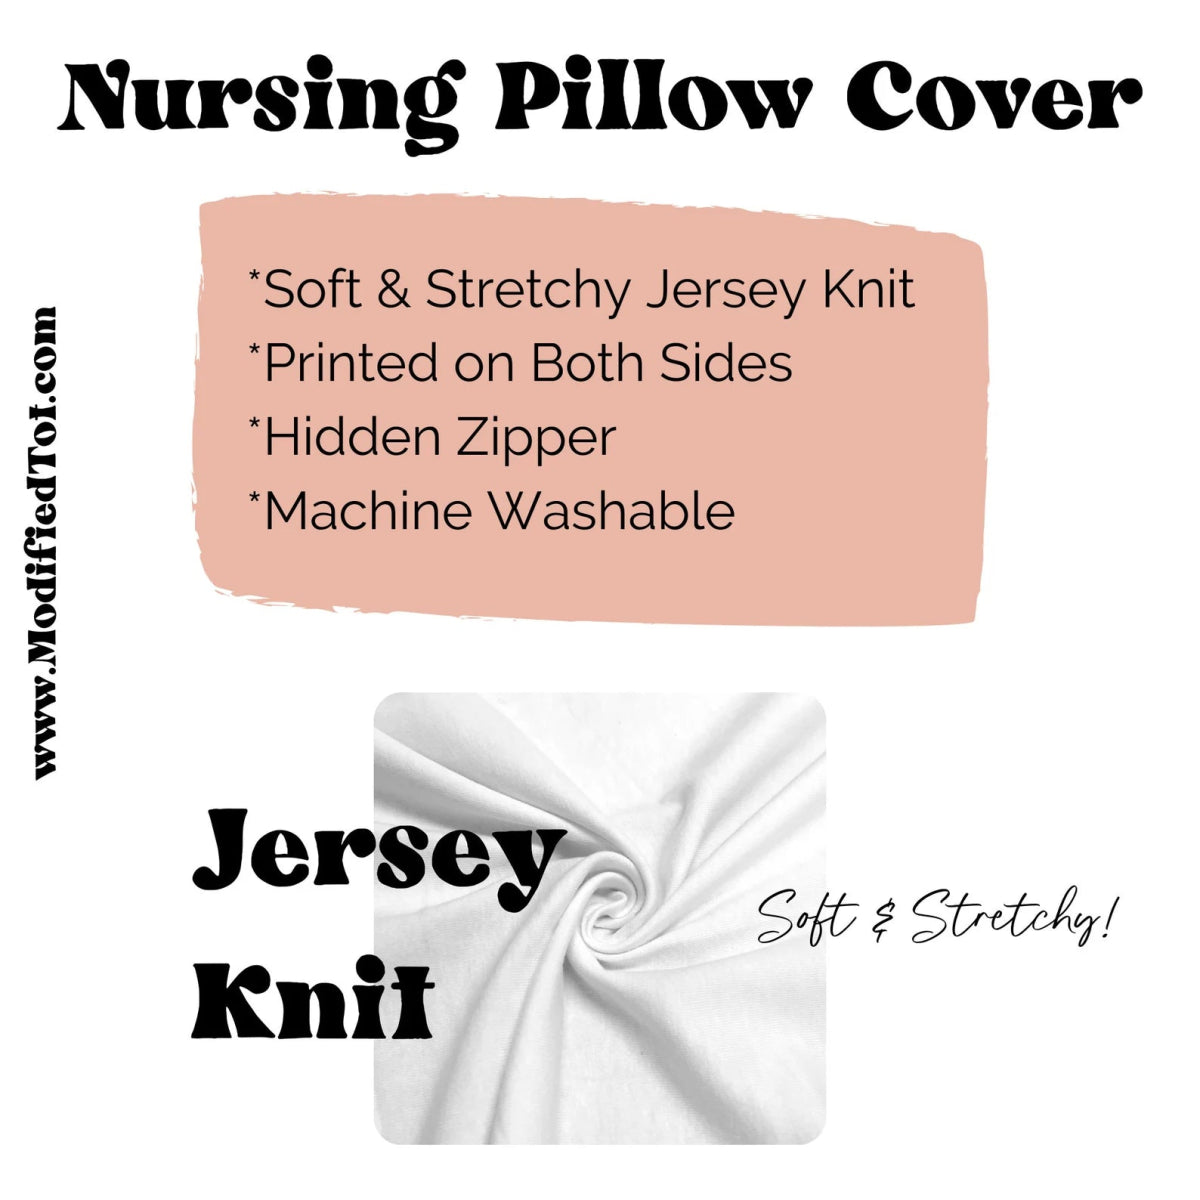 Vintage Butterfly Nursing Pillow Cover - gender_girl, Theme_Butterfly, Vintage Butterfly